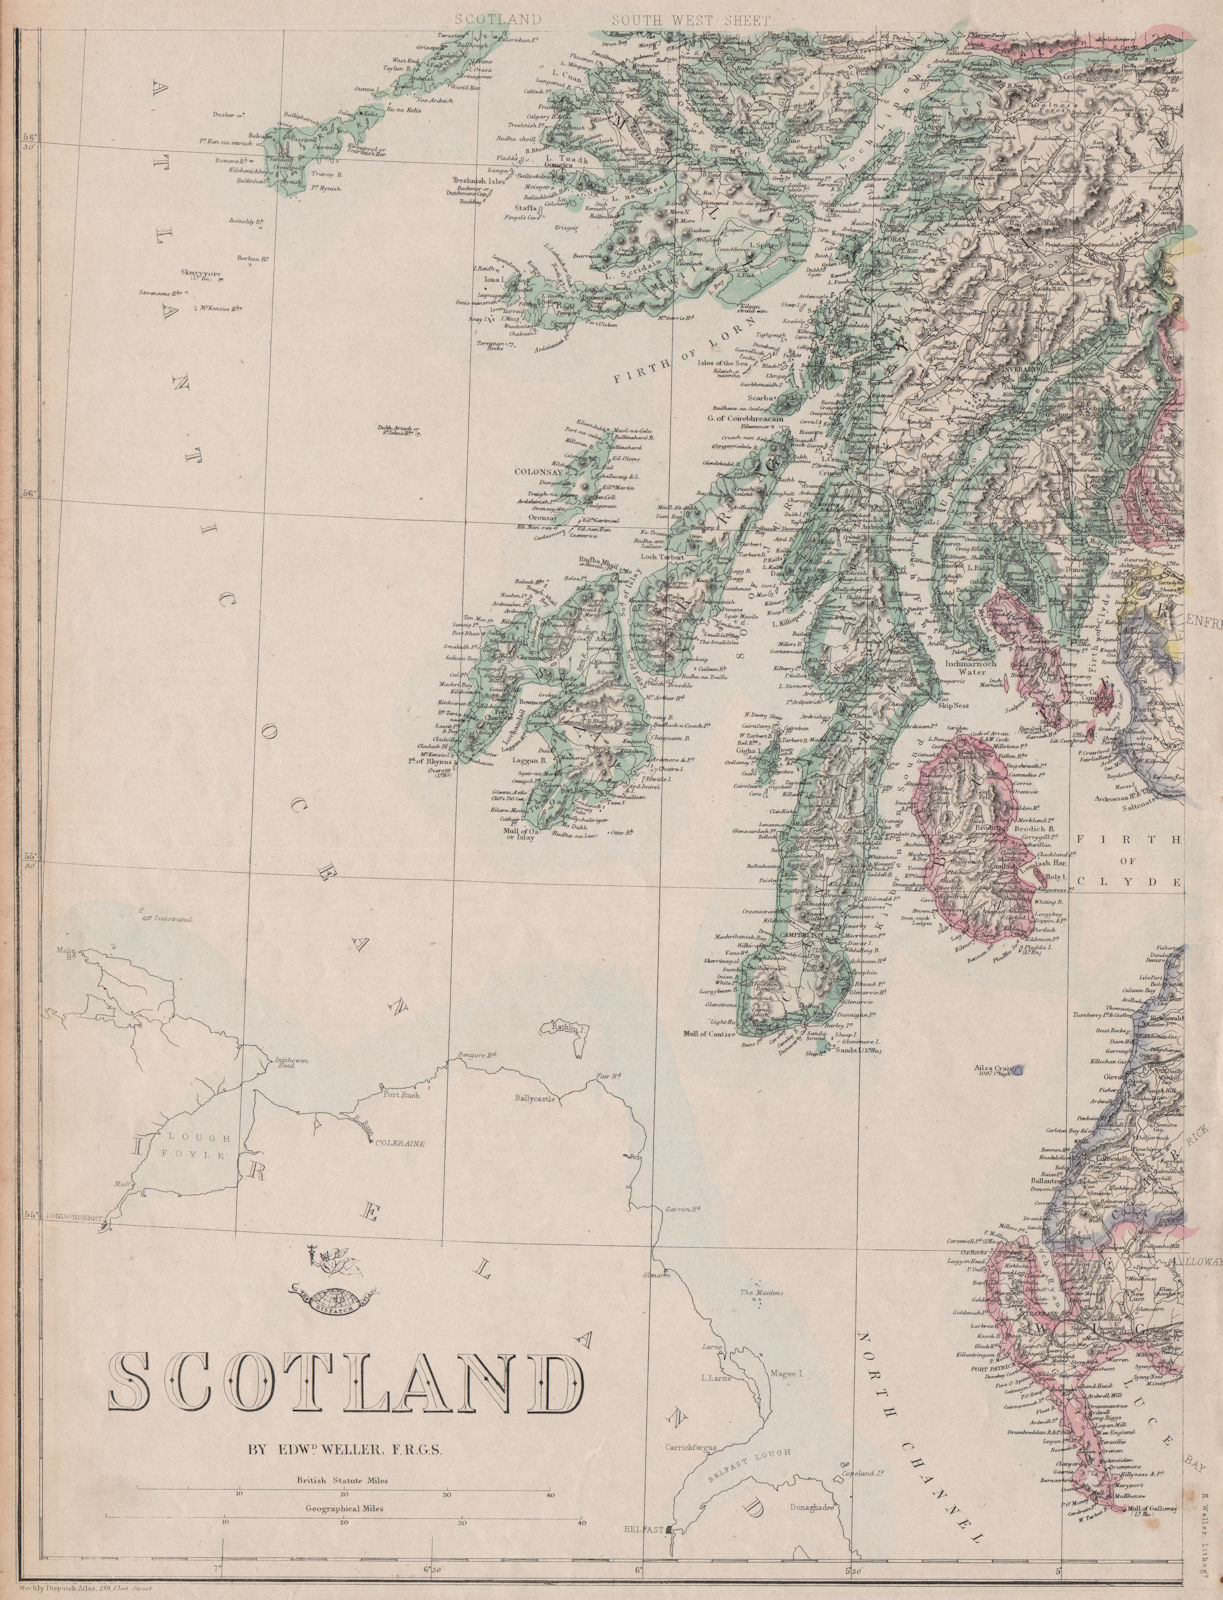 SCOTLAND SOUTH WEST. Arran Kintyre islay Jura Mull Colonsay. WELLER 1863 map